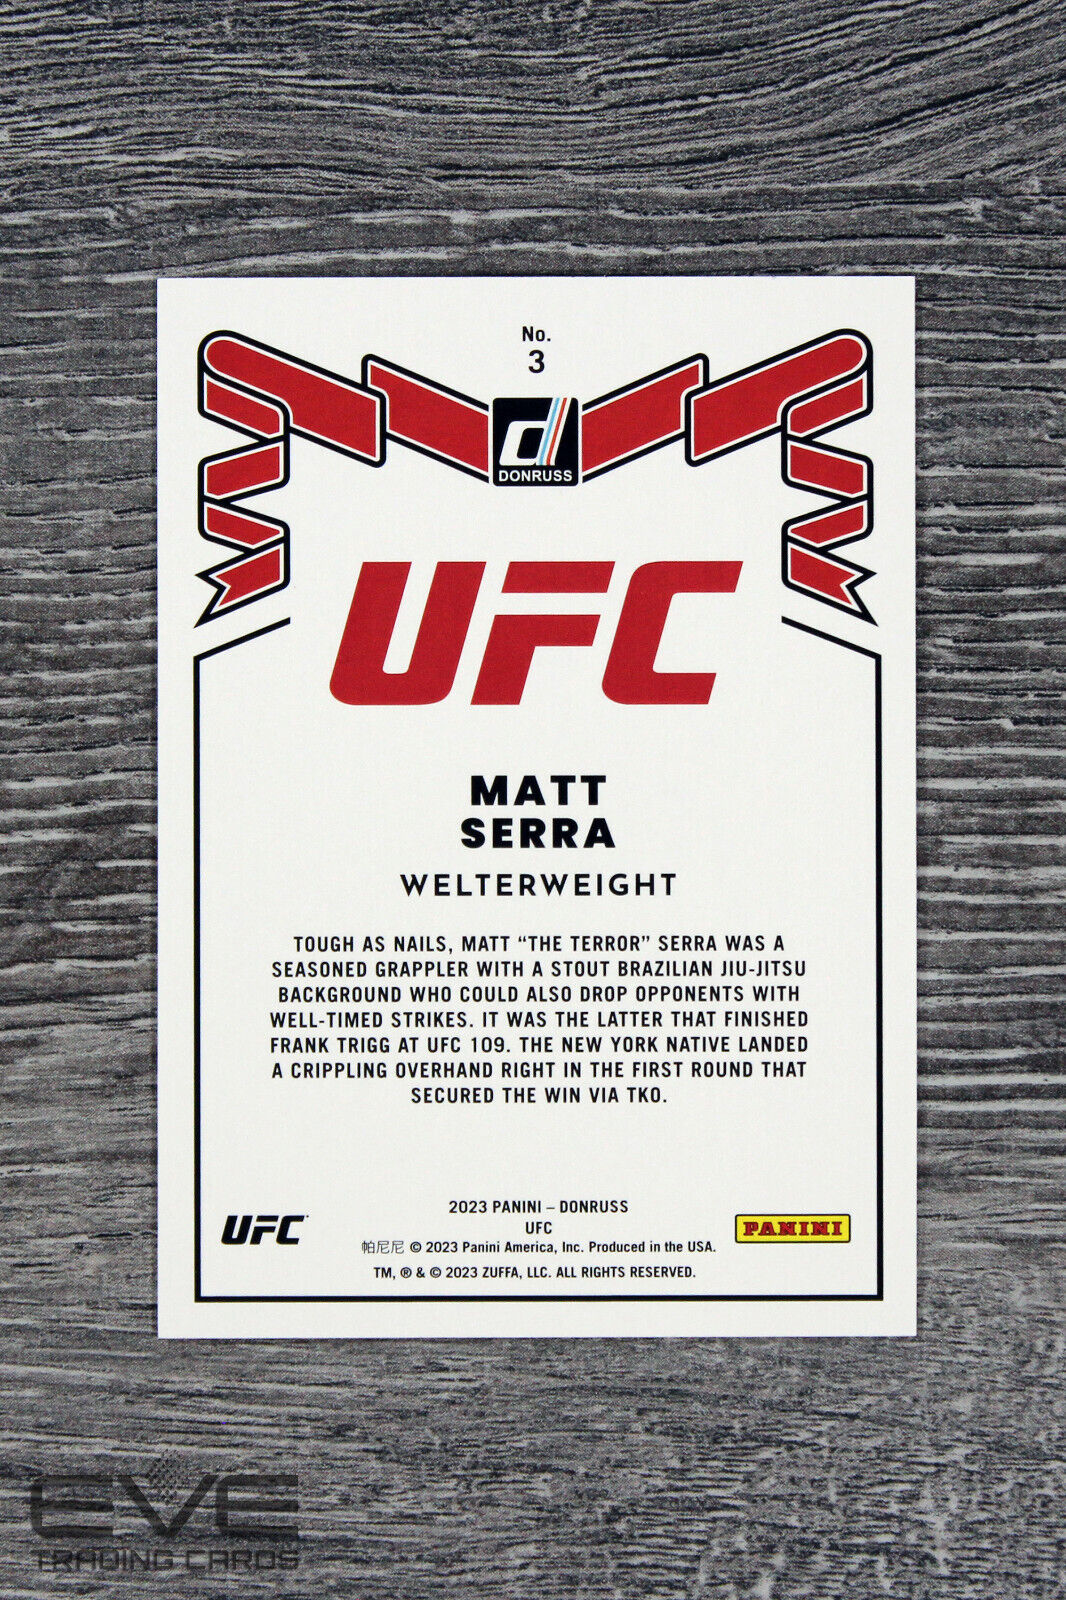 2023 Panini Donruss UFC Card "Retro Series" #3 Matt Serra - NM/M